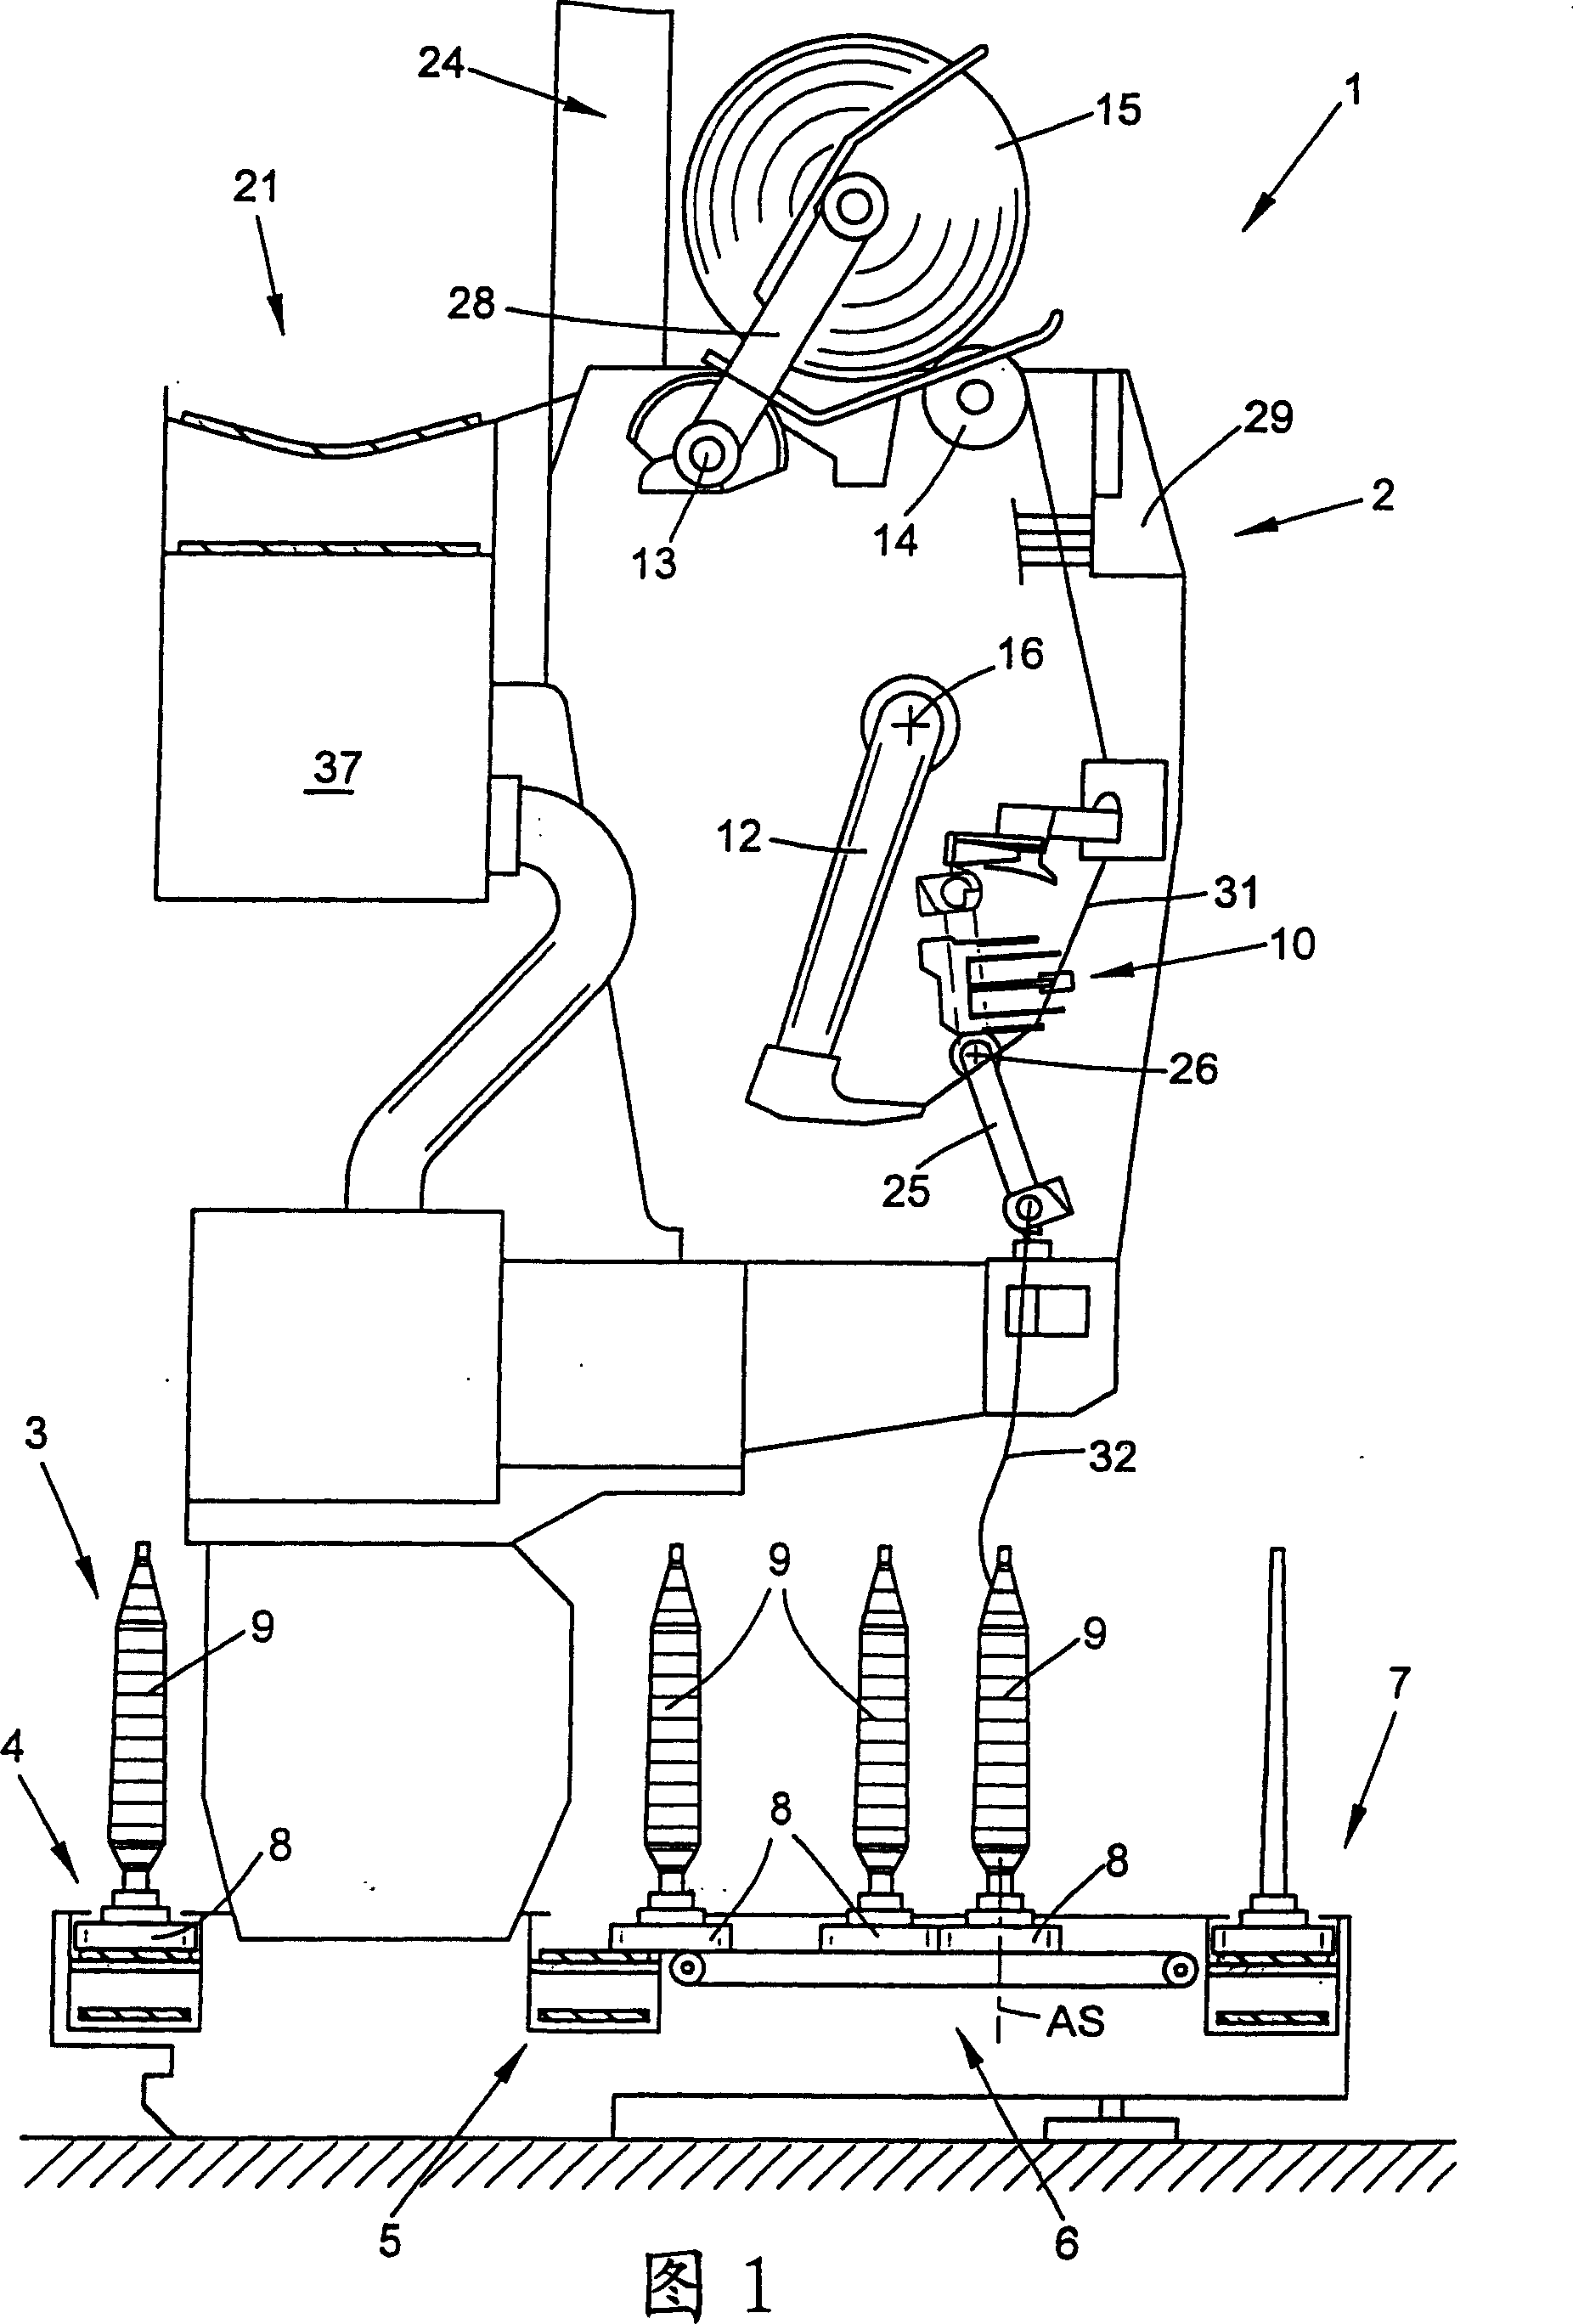 Apparatus for splicing yarns pneumatically